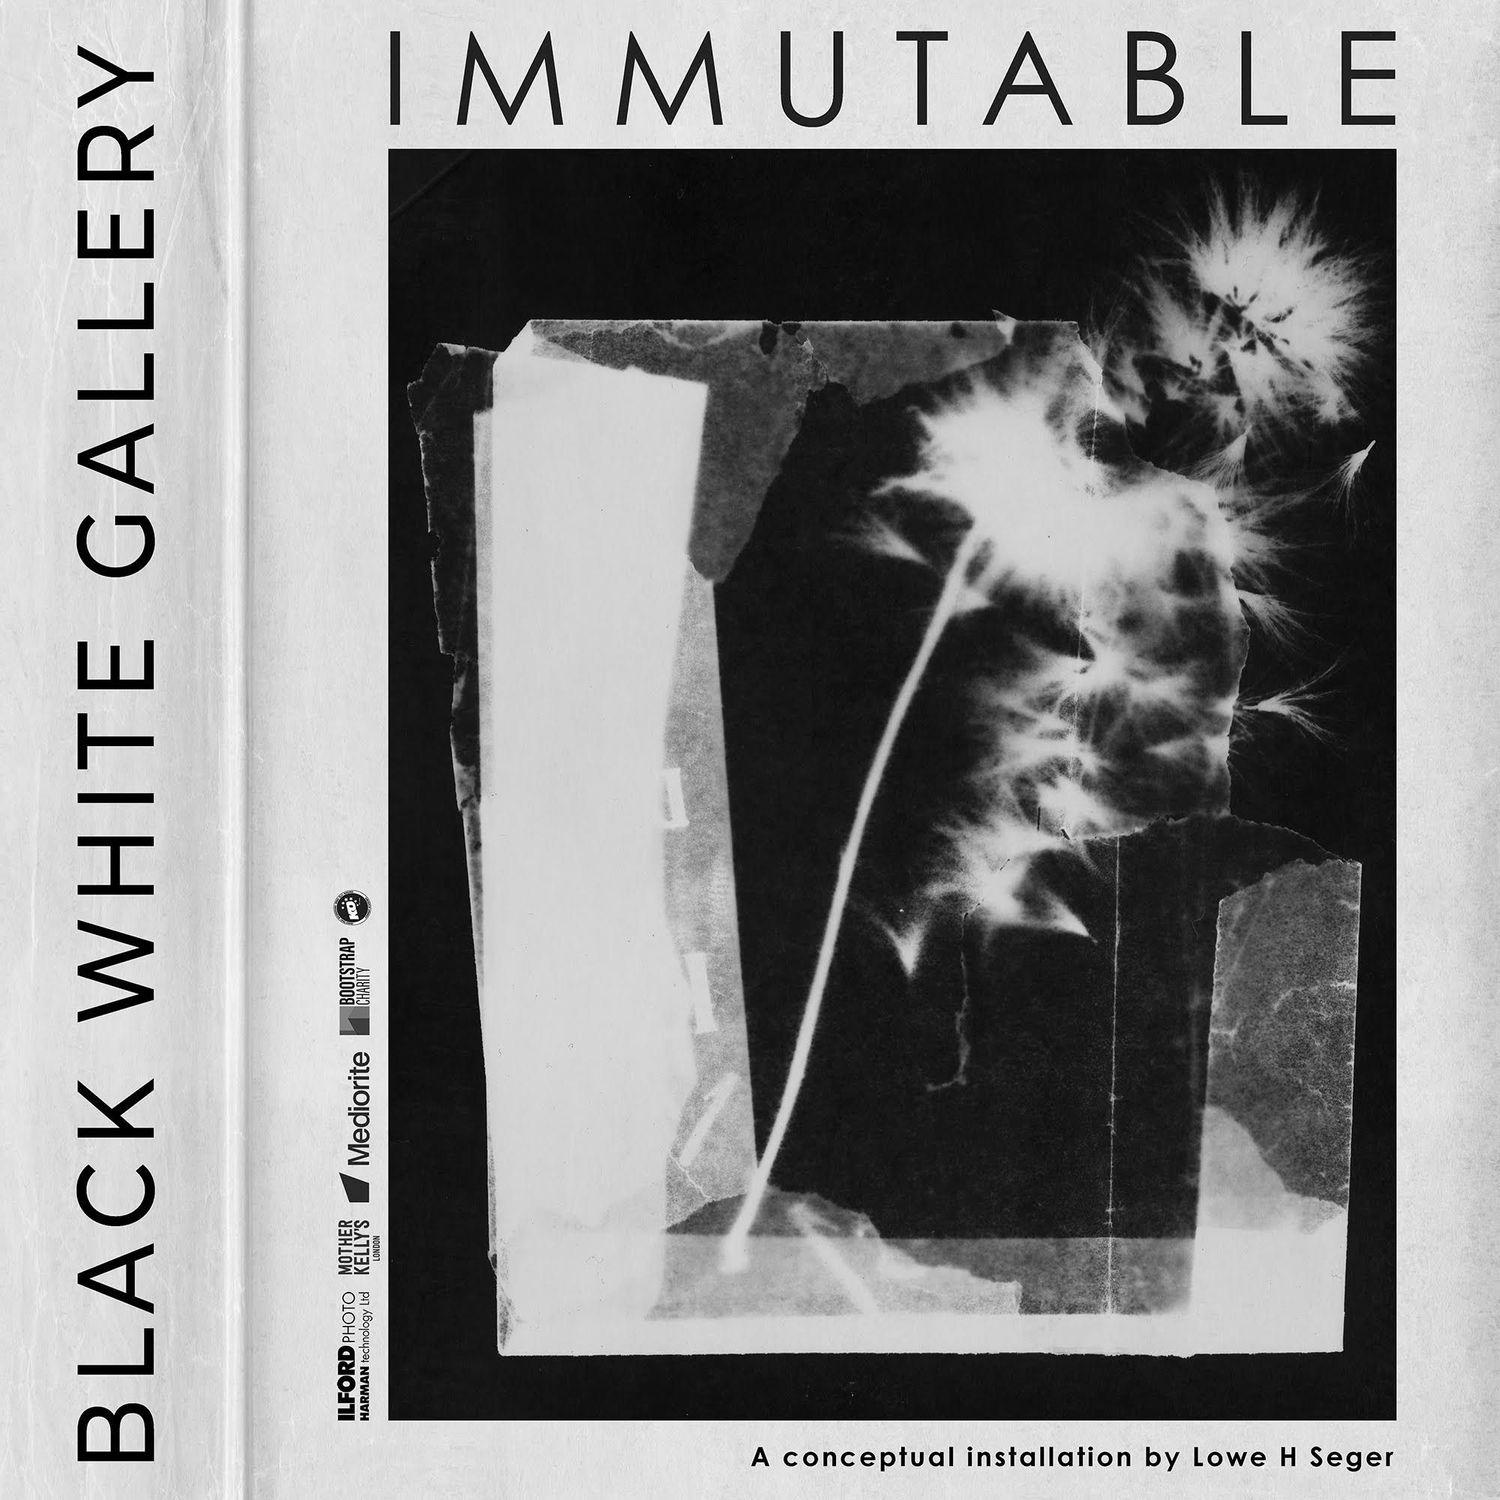 Immutable / Lowe H Seger Solo Show / Black White Gallery  | Lowe H Seger | Broadworks